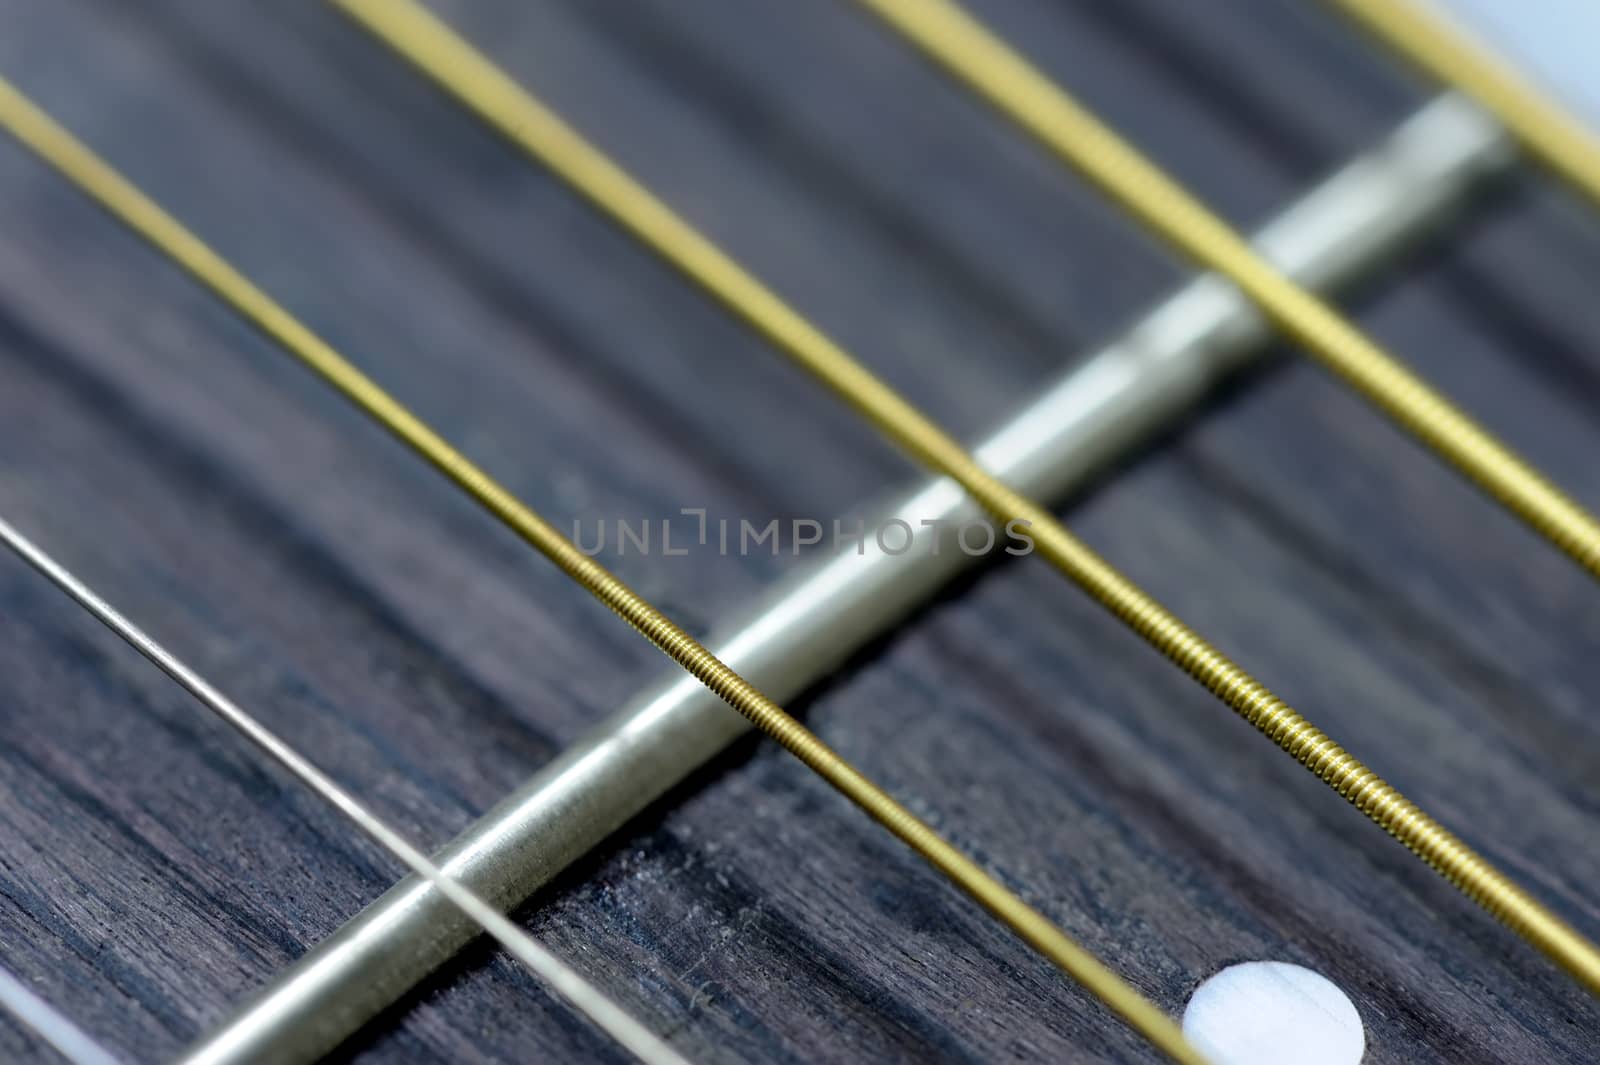 Guitar strings and frets by byrdyak